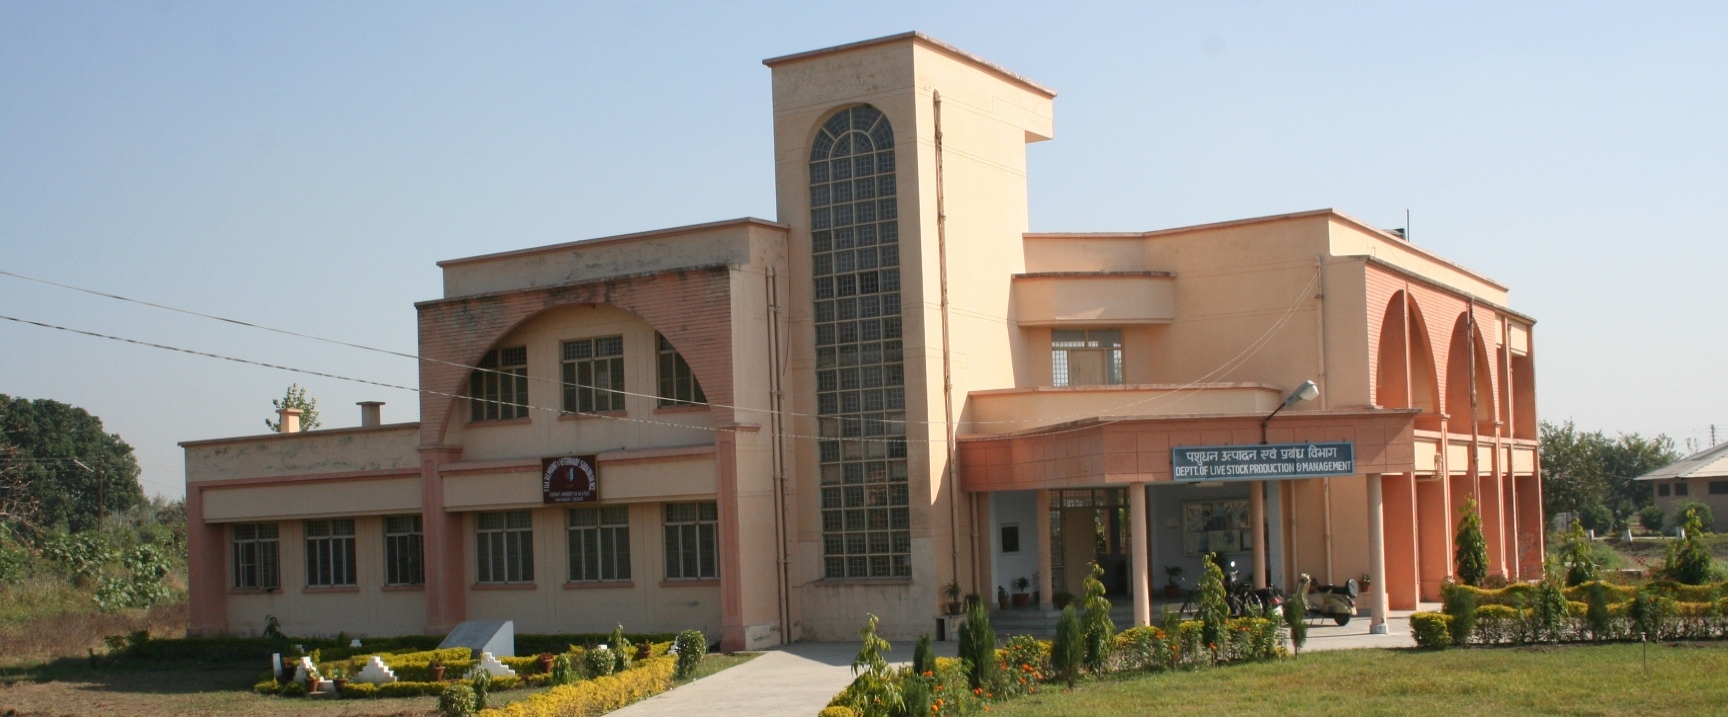 Govind Ballabh Pant University